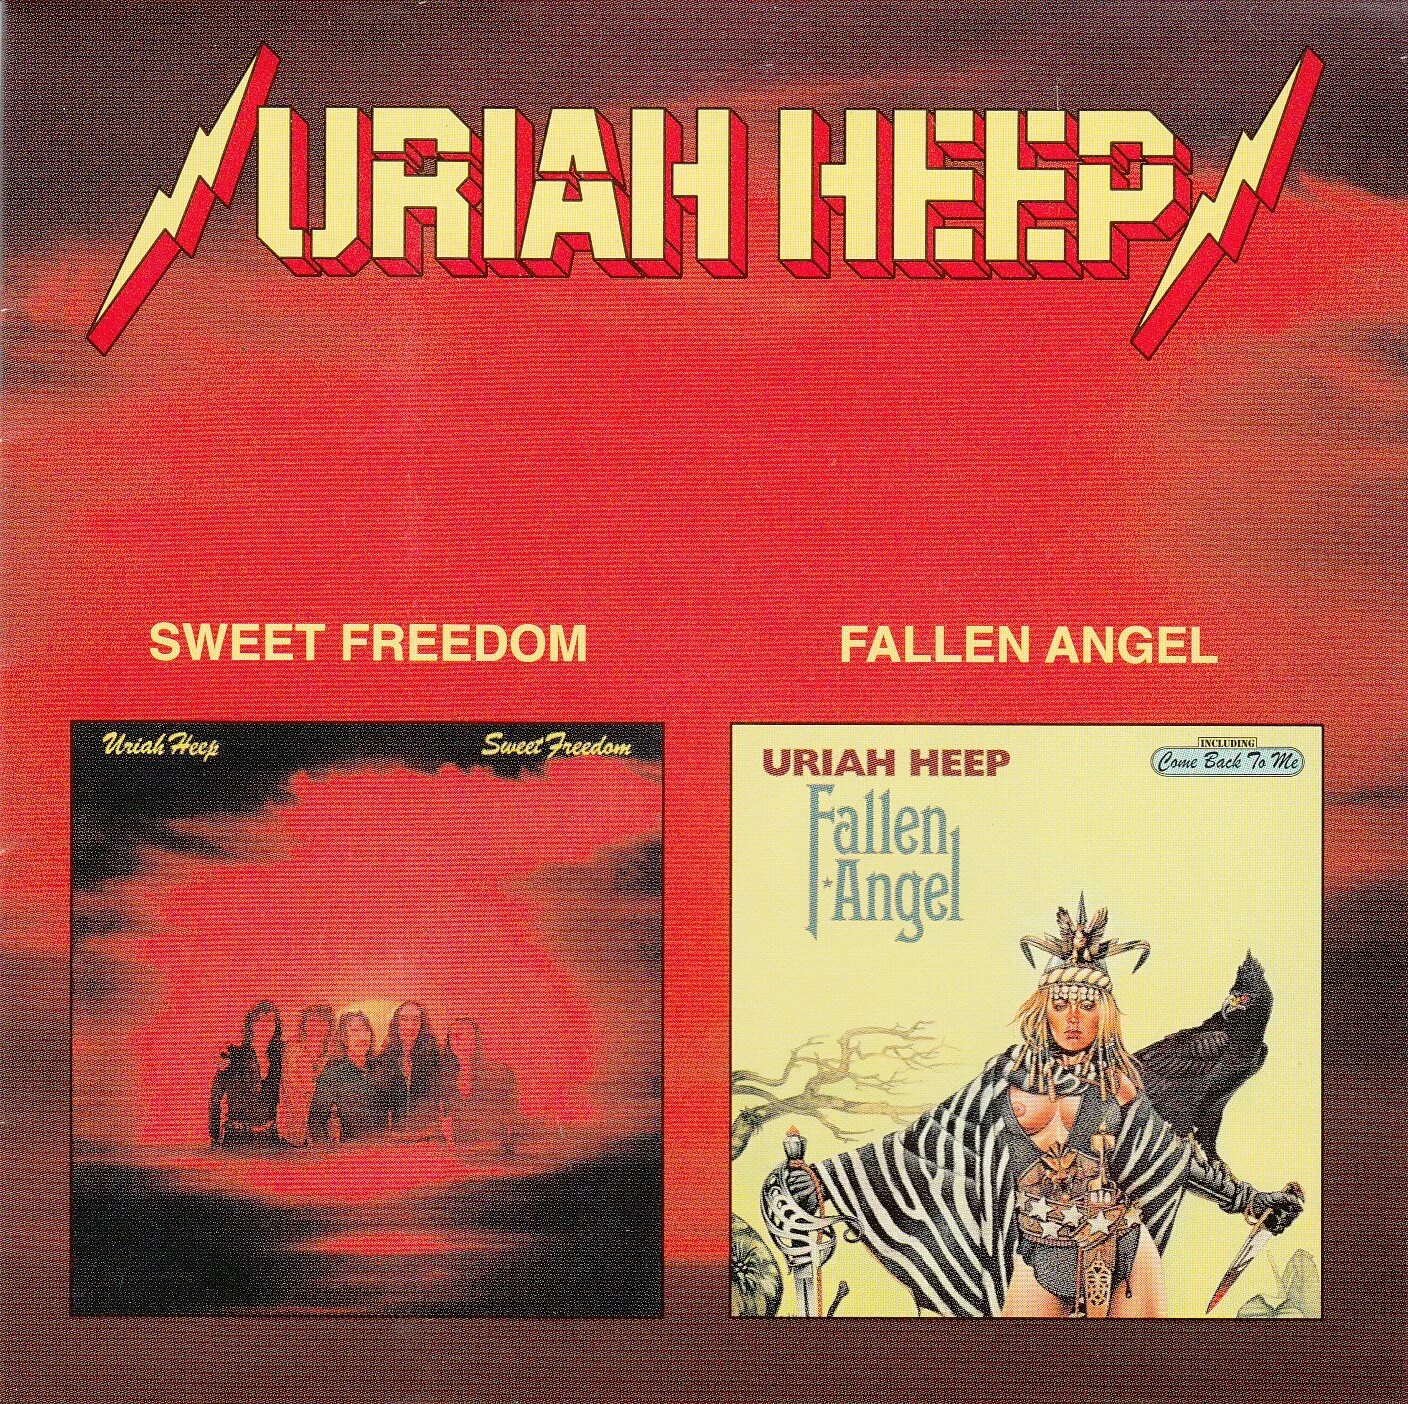 Fallen flac. Uriah Heep Sweet Freedom 1973 обложка. Uriah Heep 1978. Uriah Heep 73. Uriah Heep Sweet Freedom обложка.